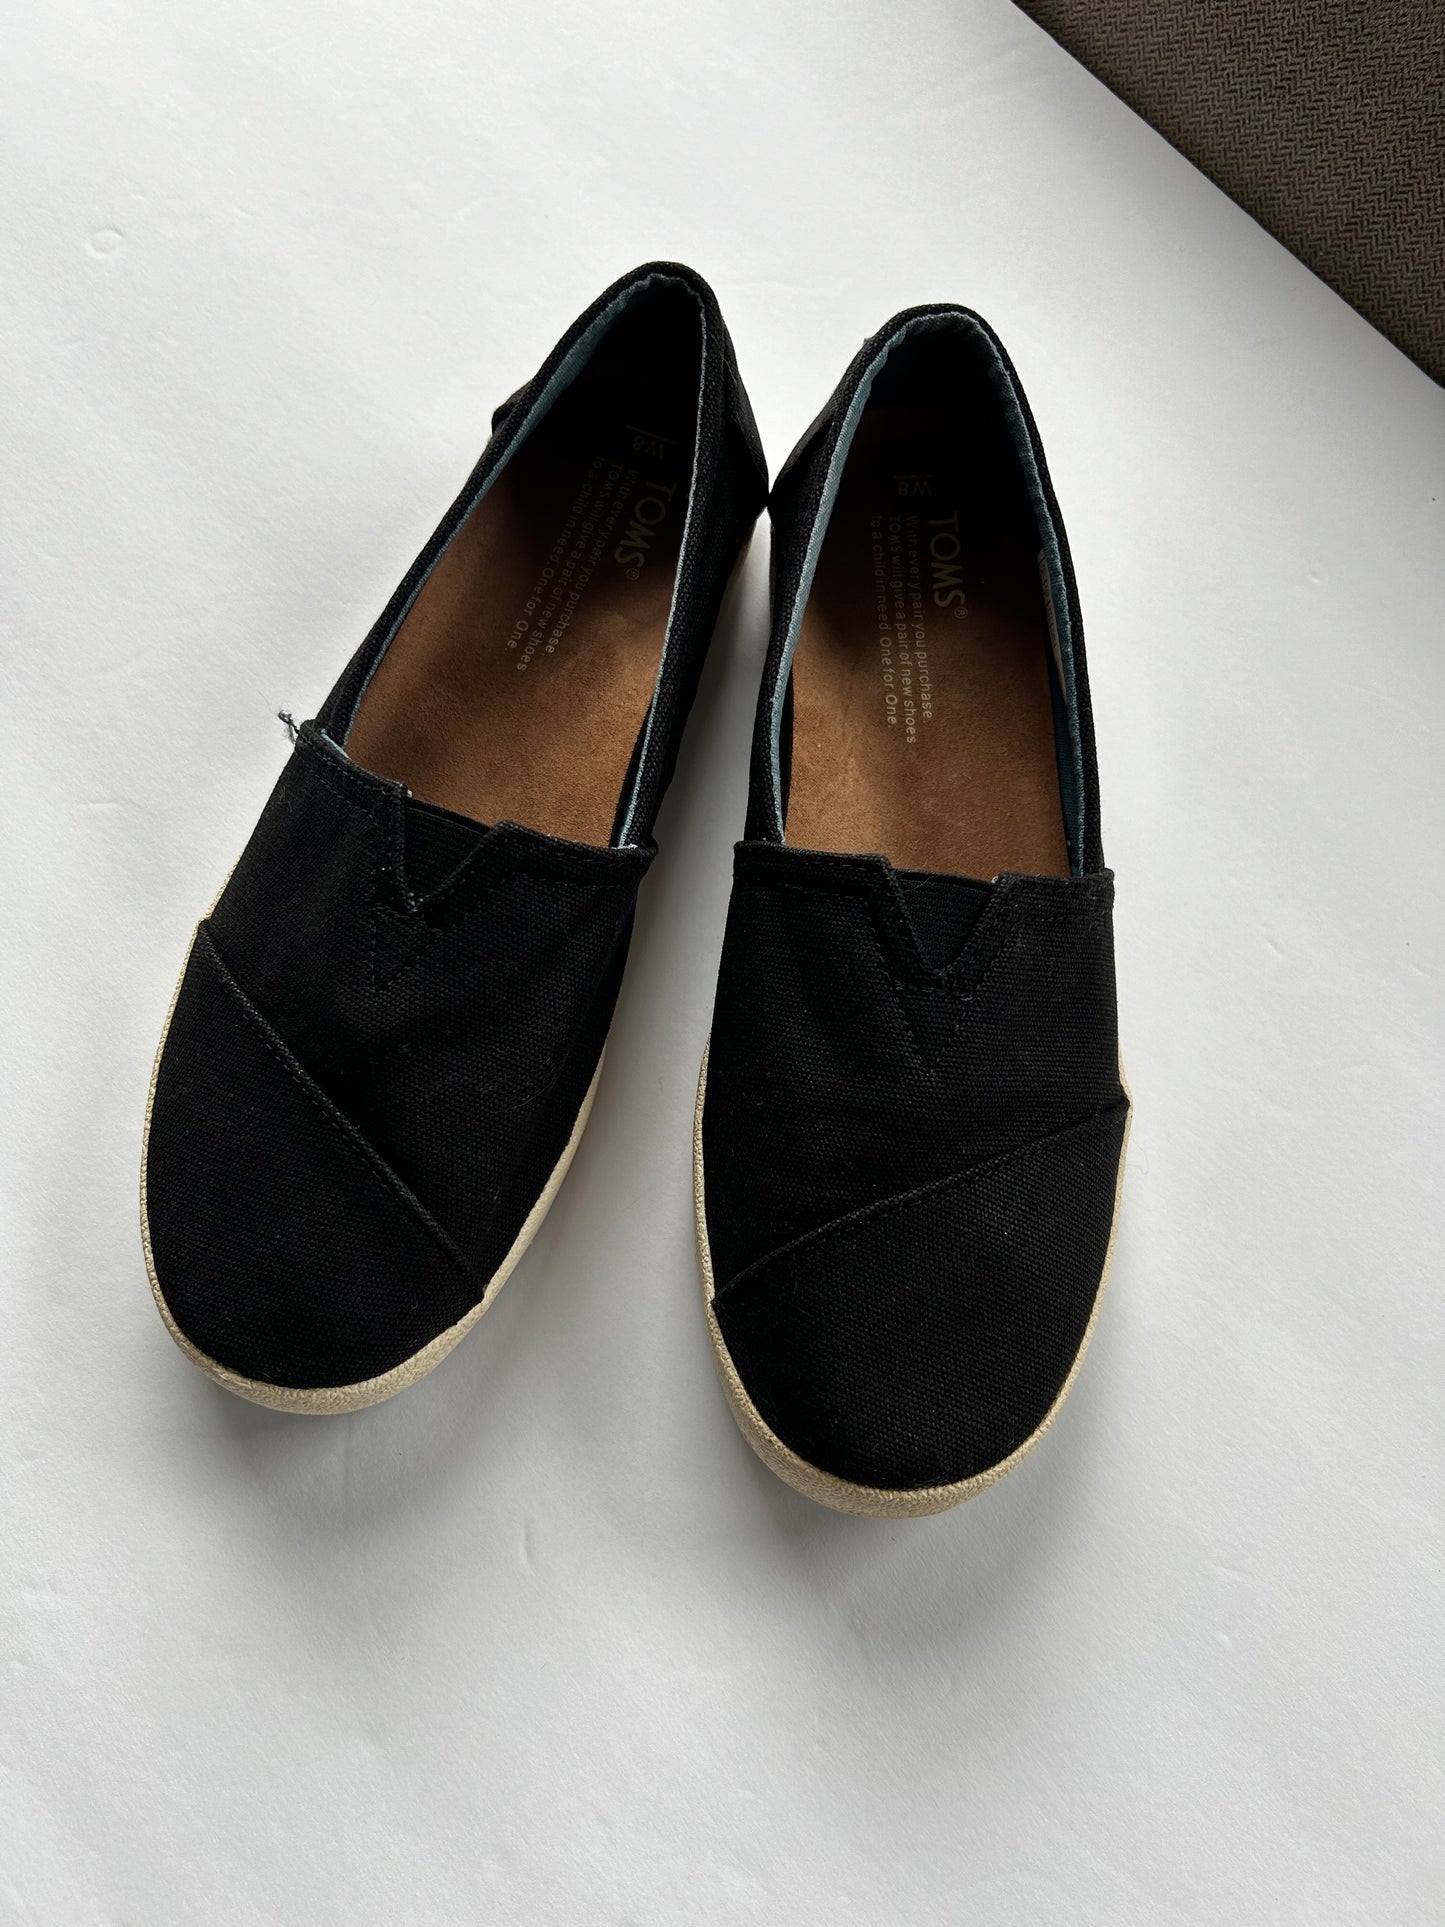 Size 8 Women's Black Toms